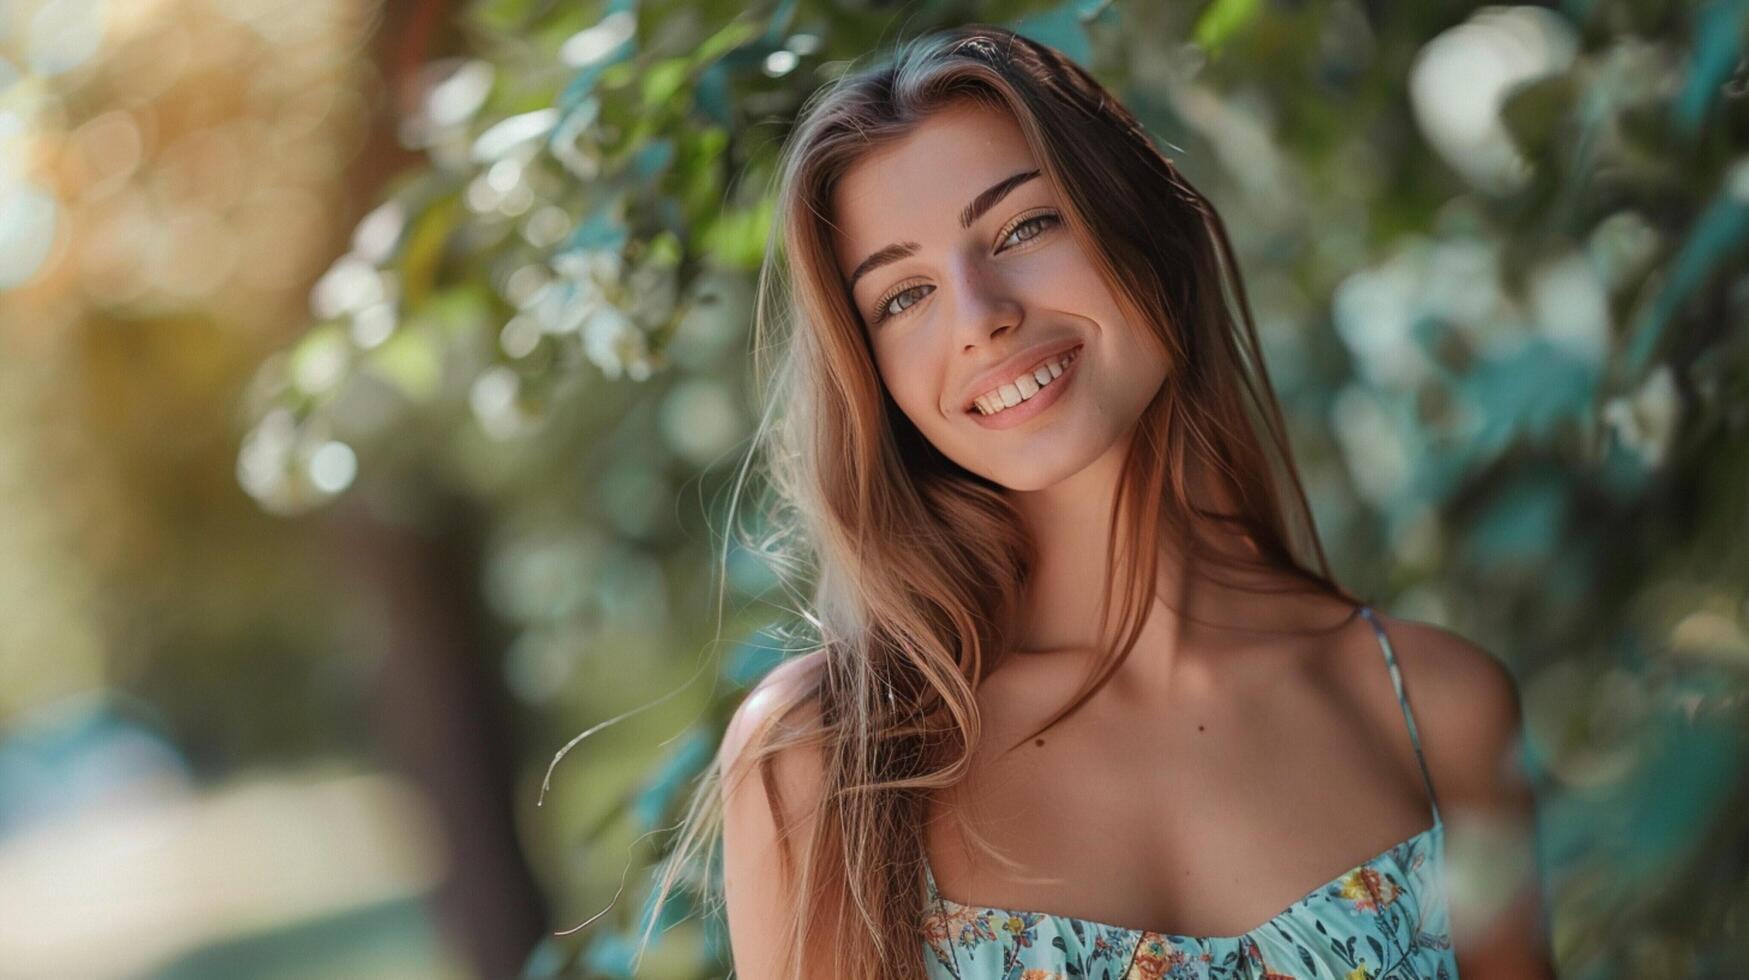 mooi jong vrouw in een zomer jurk glimlachen foto